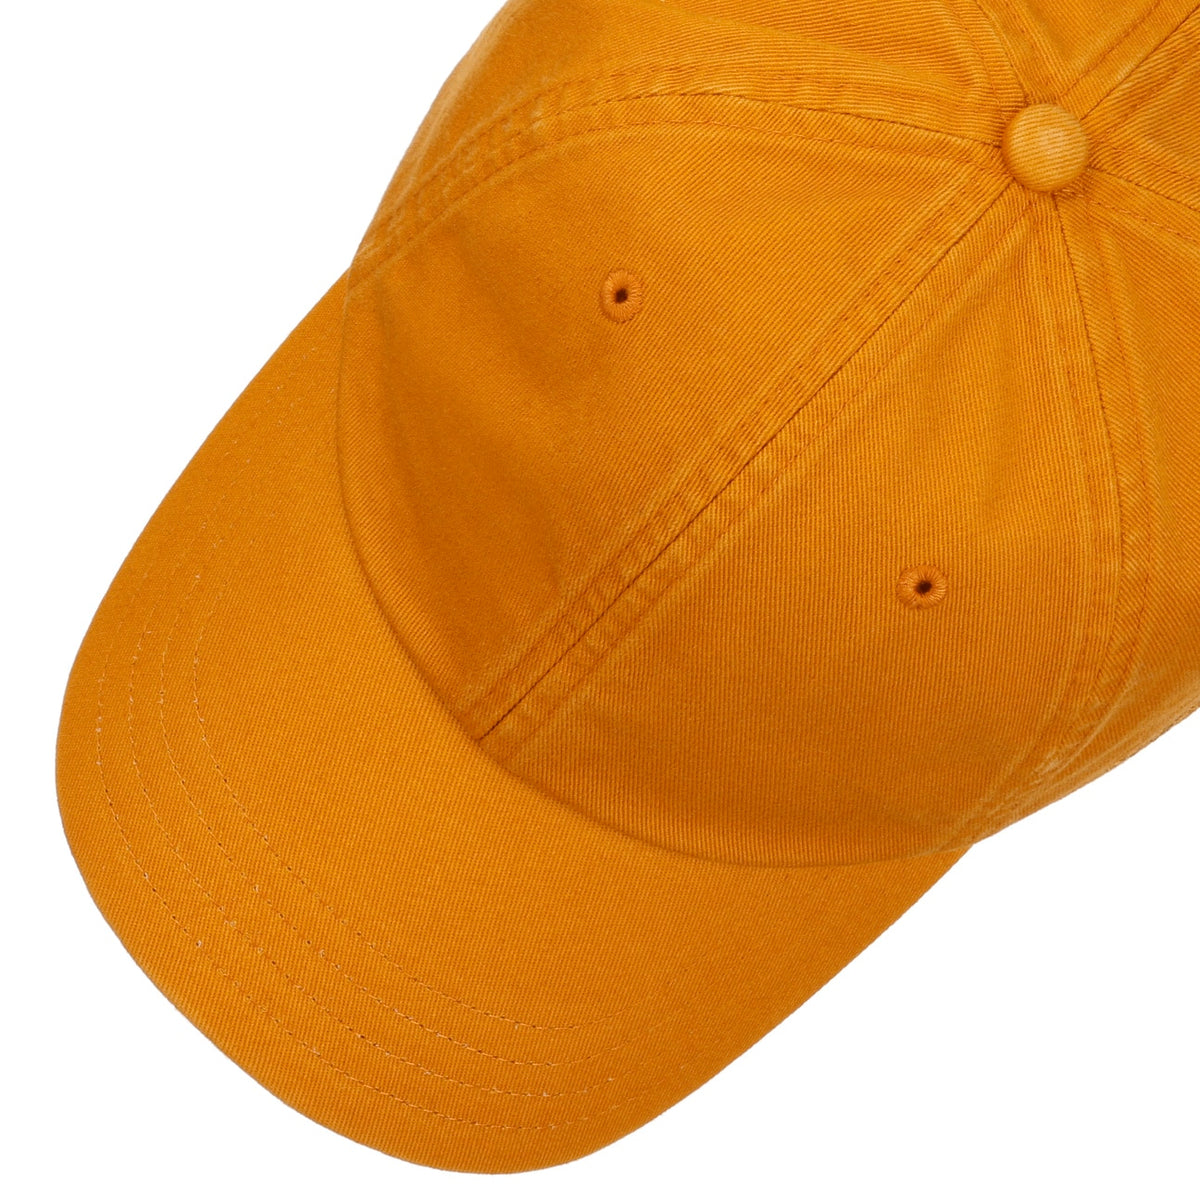 Stetson Baseball Cap Cotton Tangerine